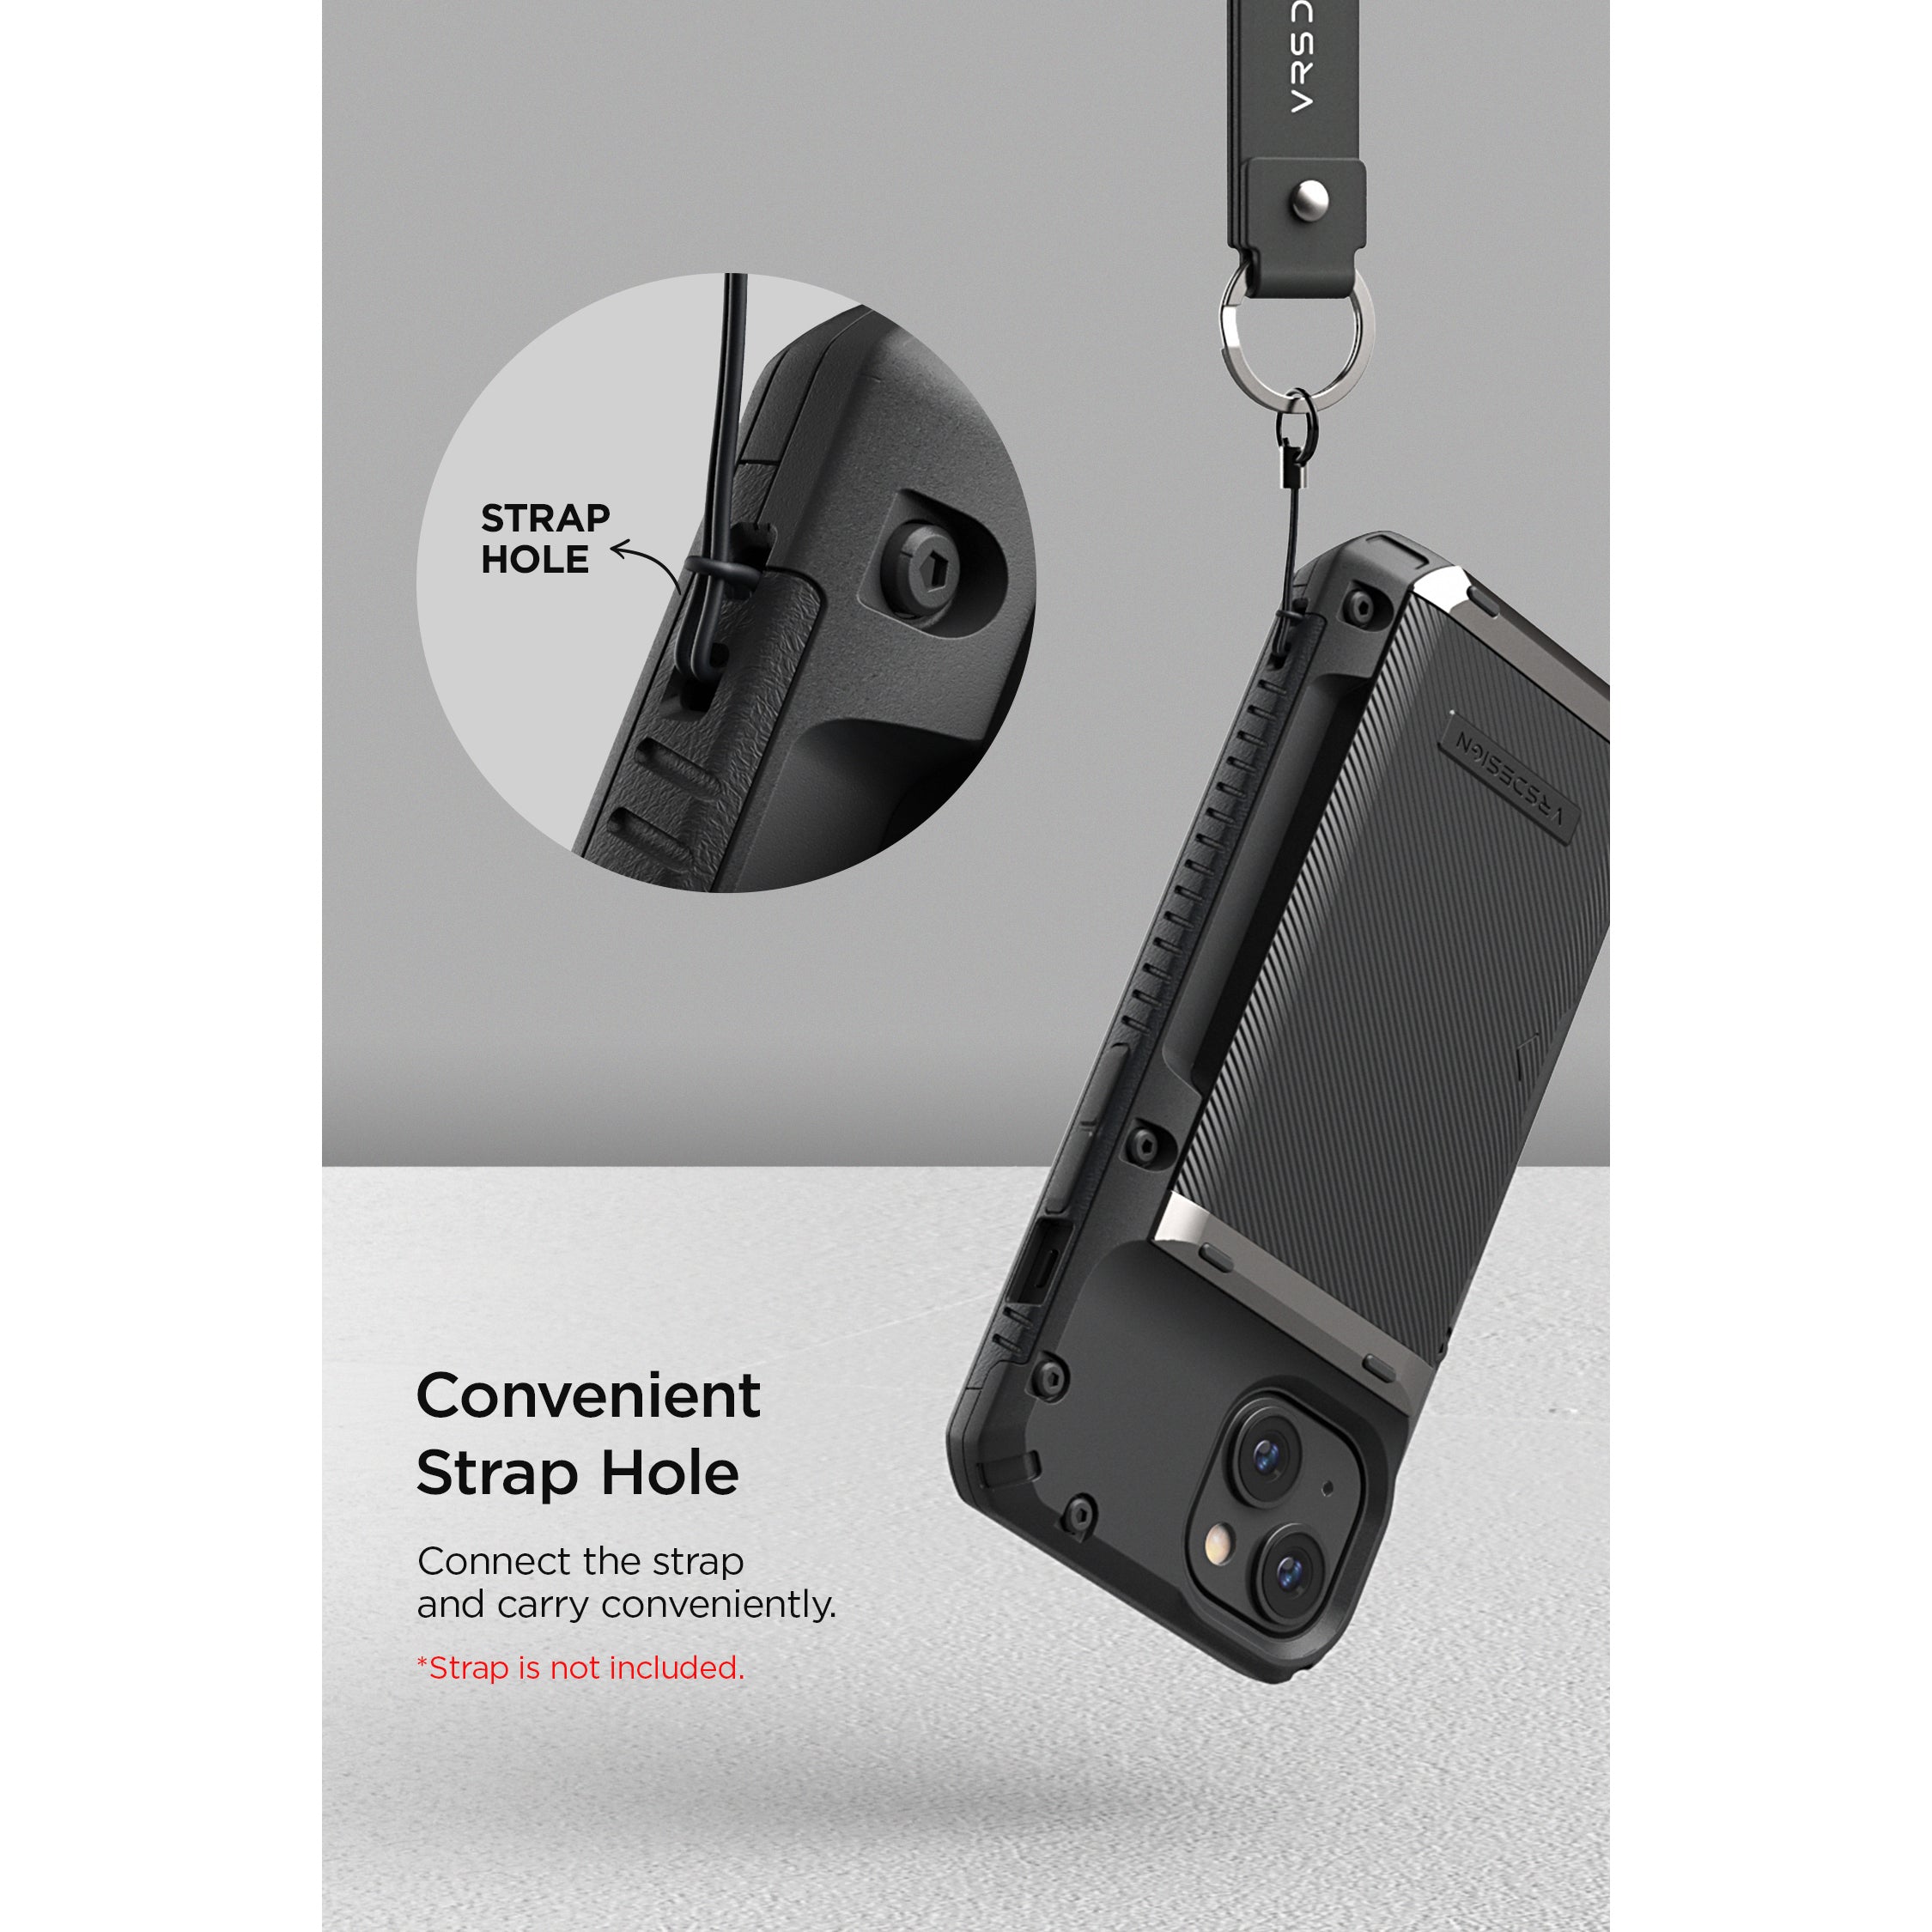 VRS Design Damda Glide Pro Case For iPhone 14 Series Mobile Phone Cases VRS Design 